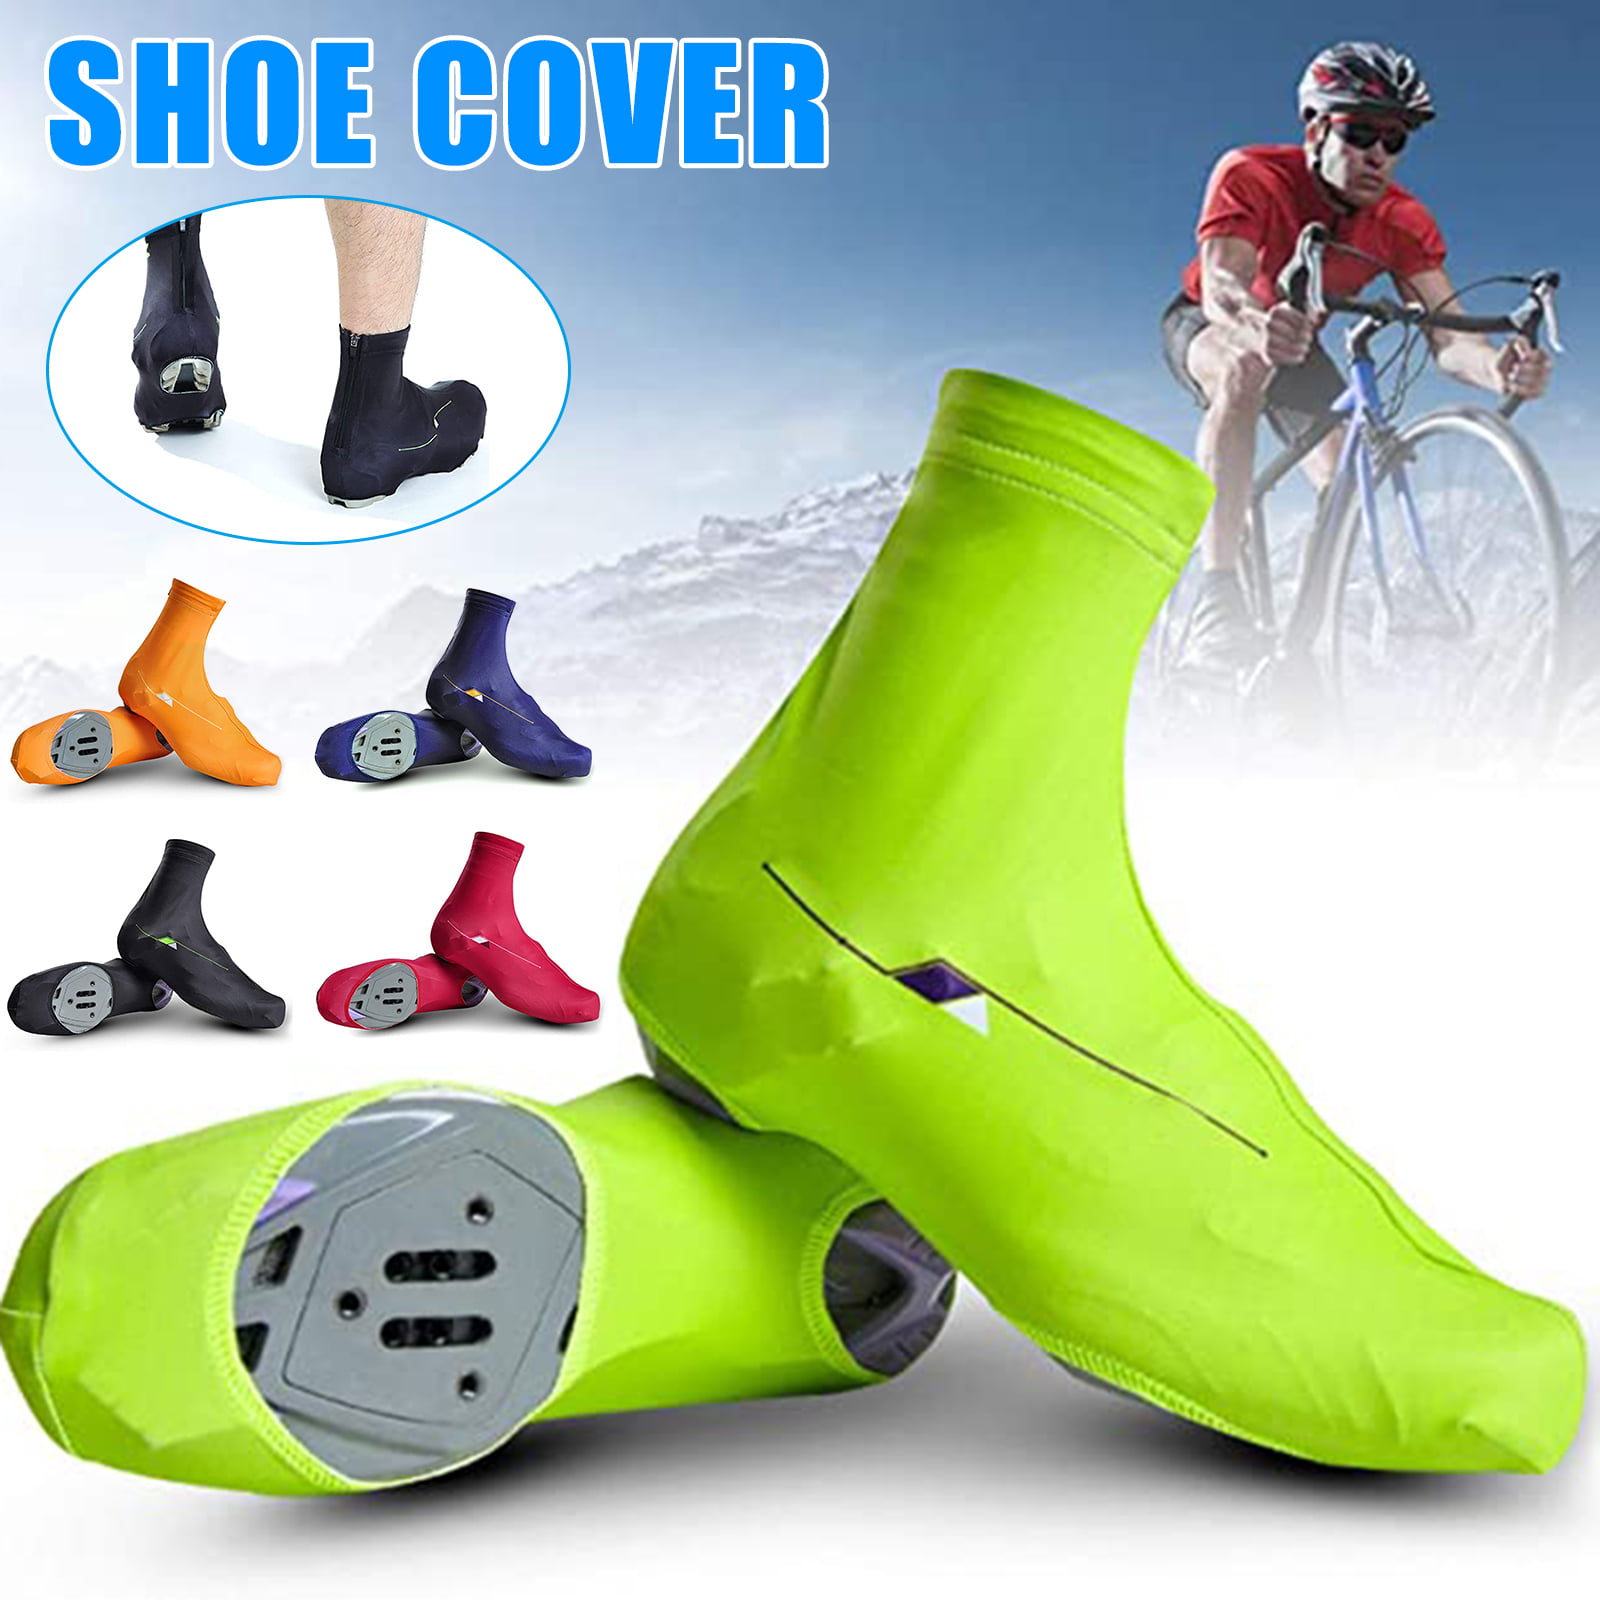 Cycling Shoe Cover Bicycle Bike Overshoe Waterproof Rain Toe Protector Windproof 